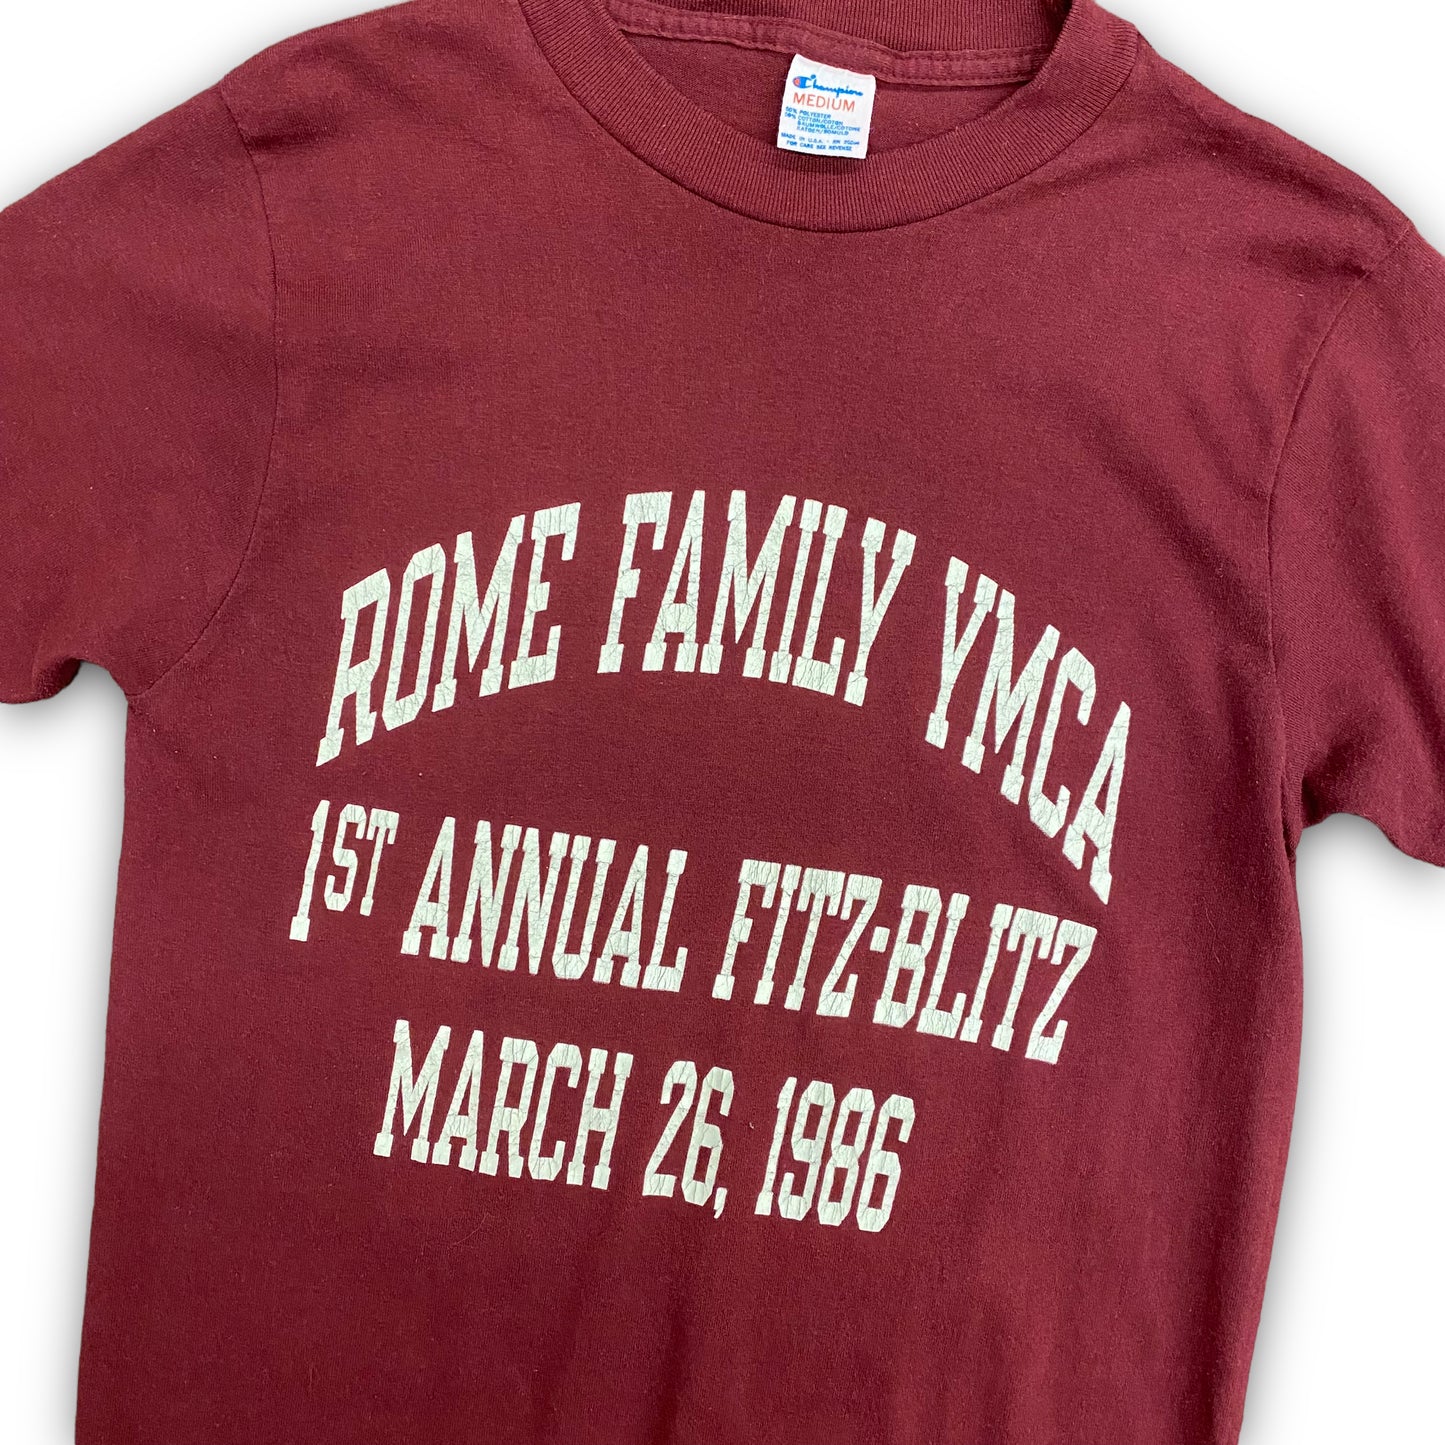 Vintage Champion 1986 Rome Family YMCA Tee - Size Medium